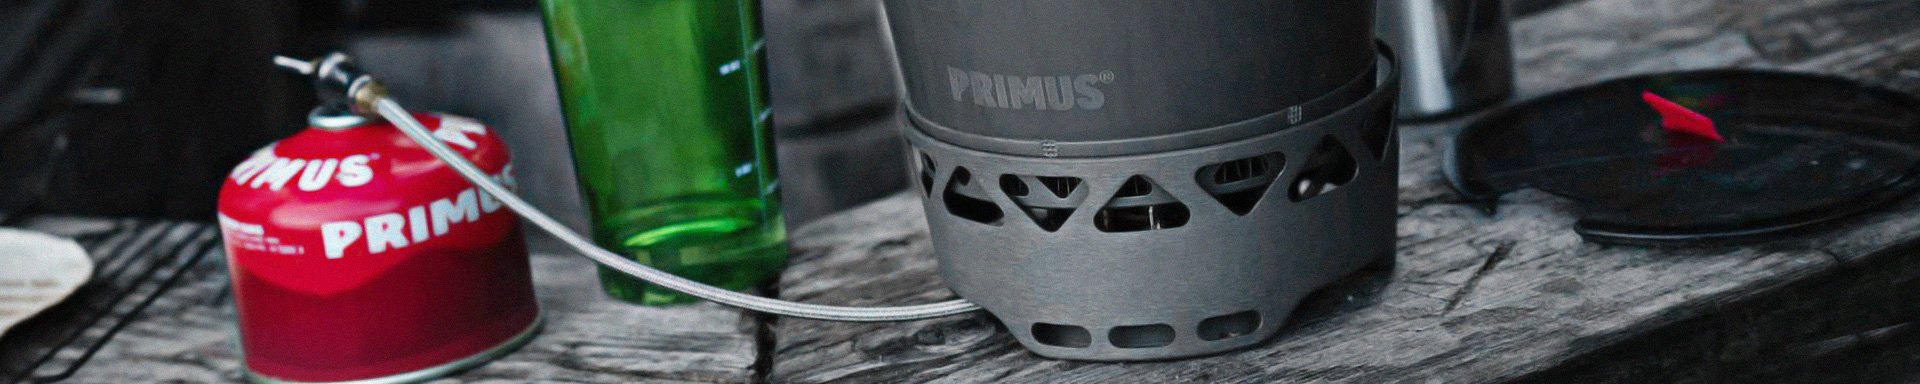 Primus Travel Mugs & Bottles